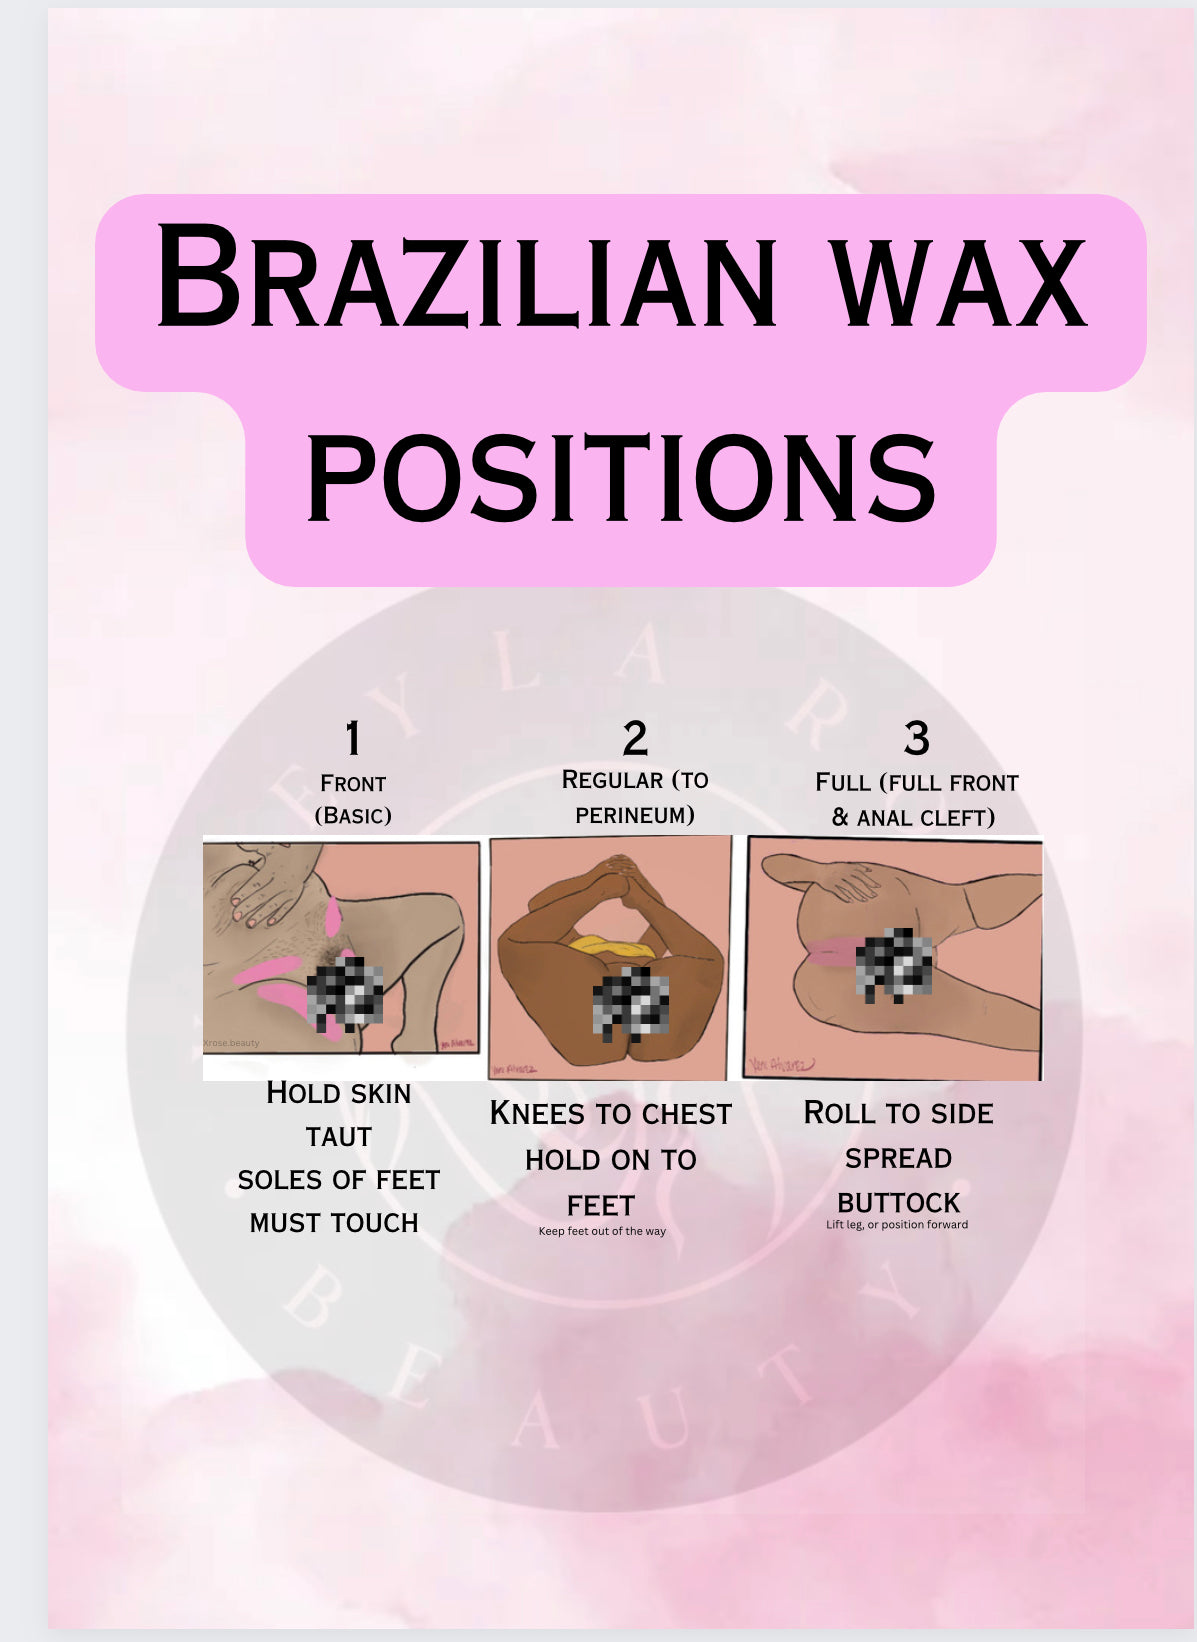 Brazilian wax positions wall art